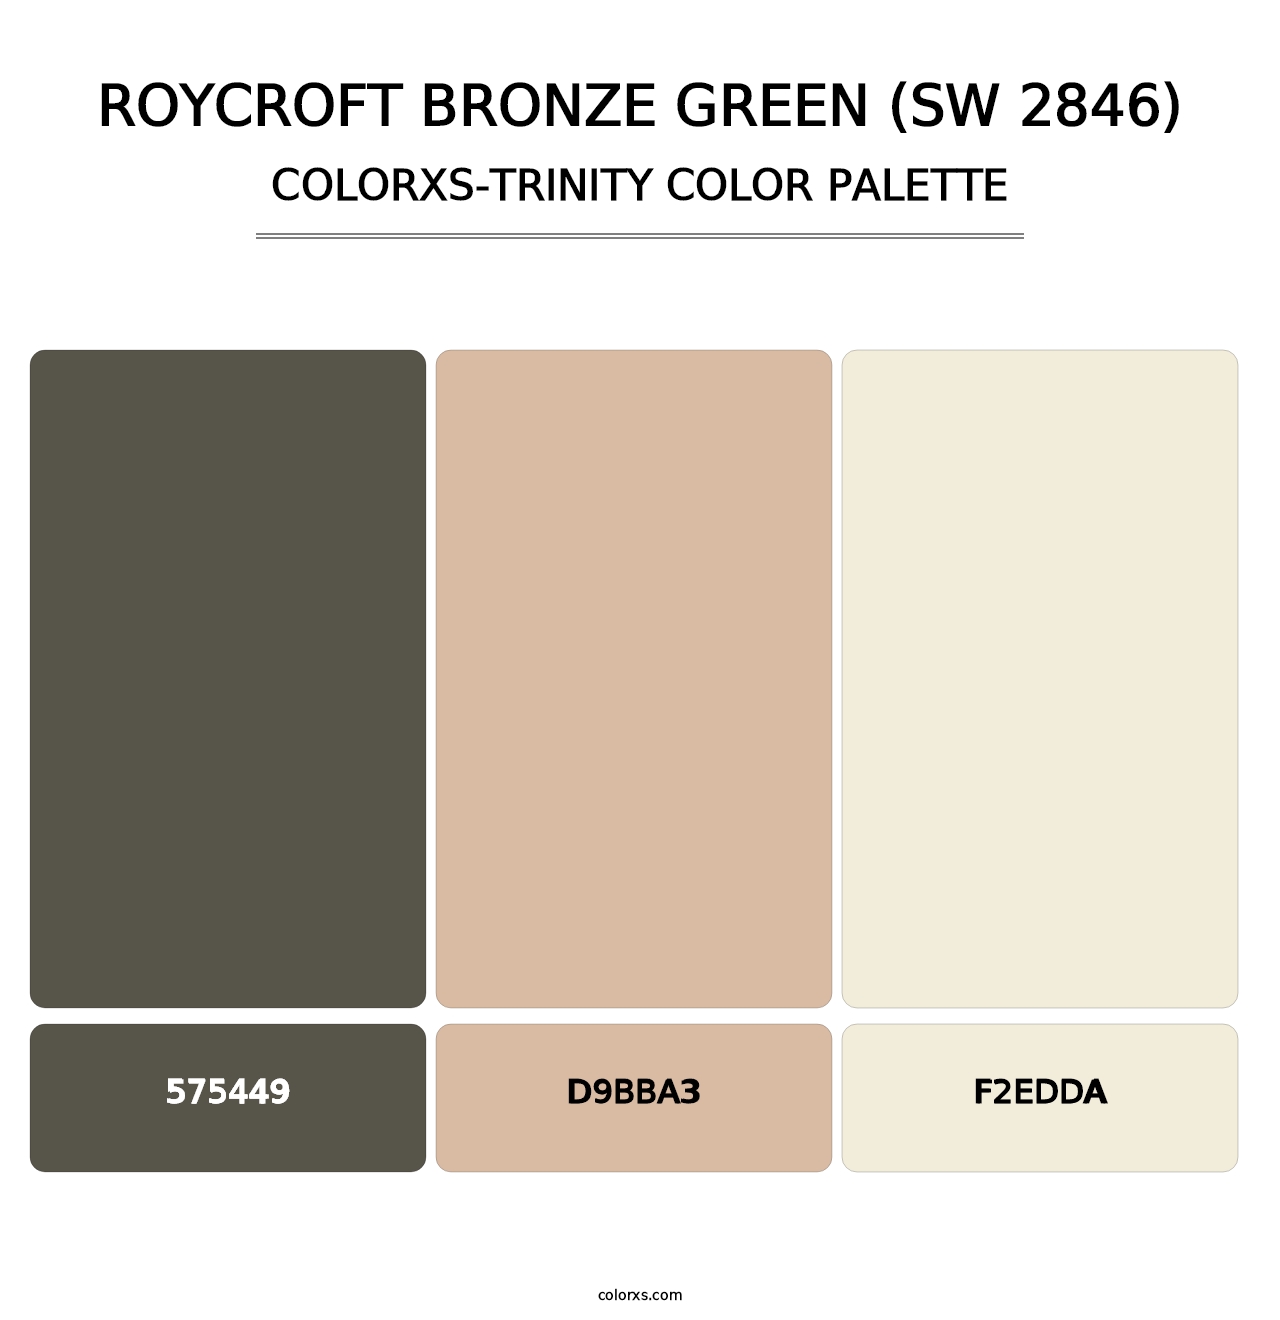 Roycroft Bronze Green (SW 2846) - Colorxs Trinity Palette